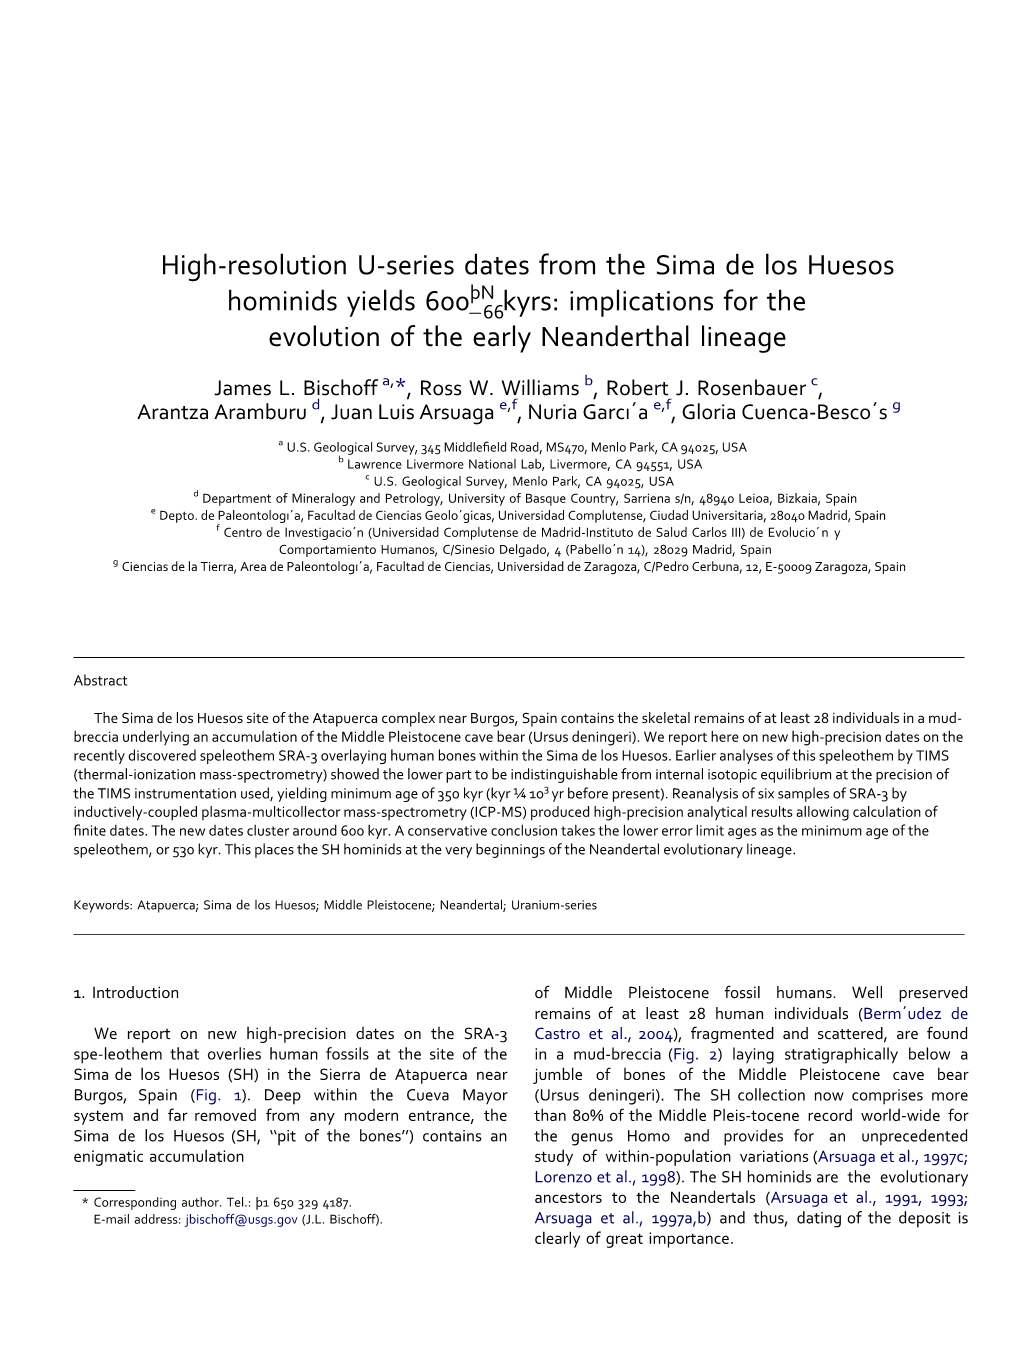 High-Resolution U-Series Dates from the Sima De Los Huesos Hominids Yields 600Þn Kyrs